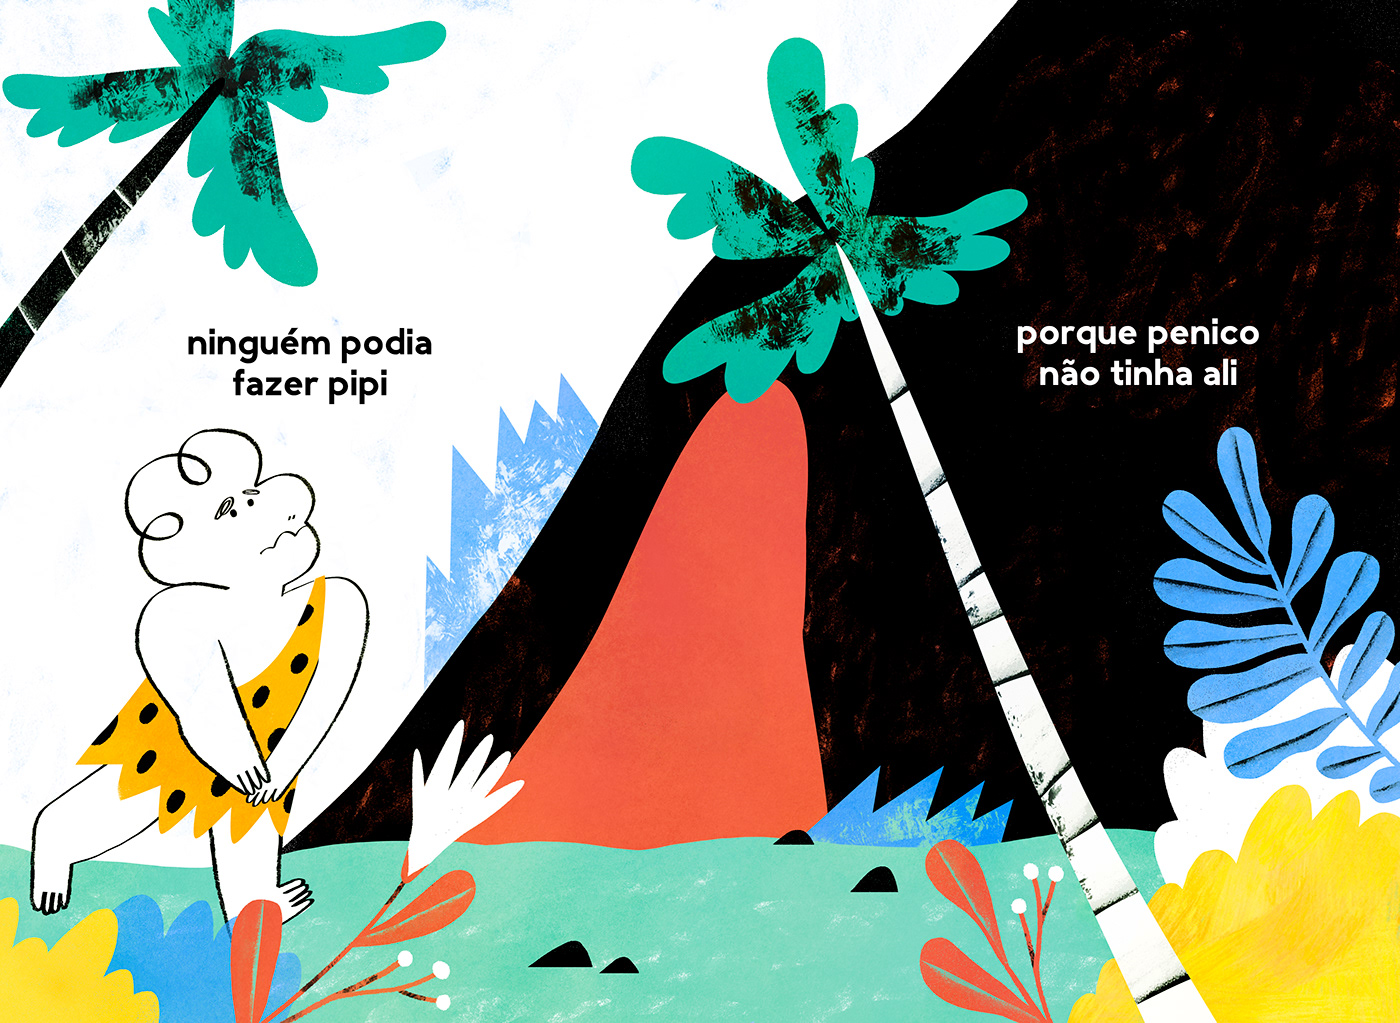 Brazilian casa Dinossaur jungle planet poem song vinicius de moraes